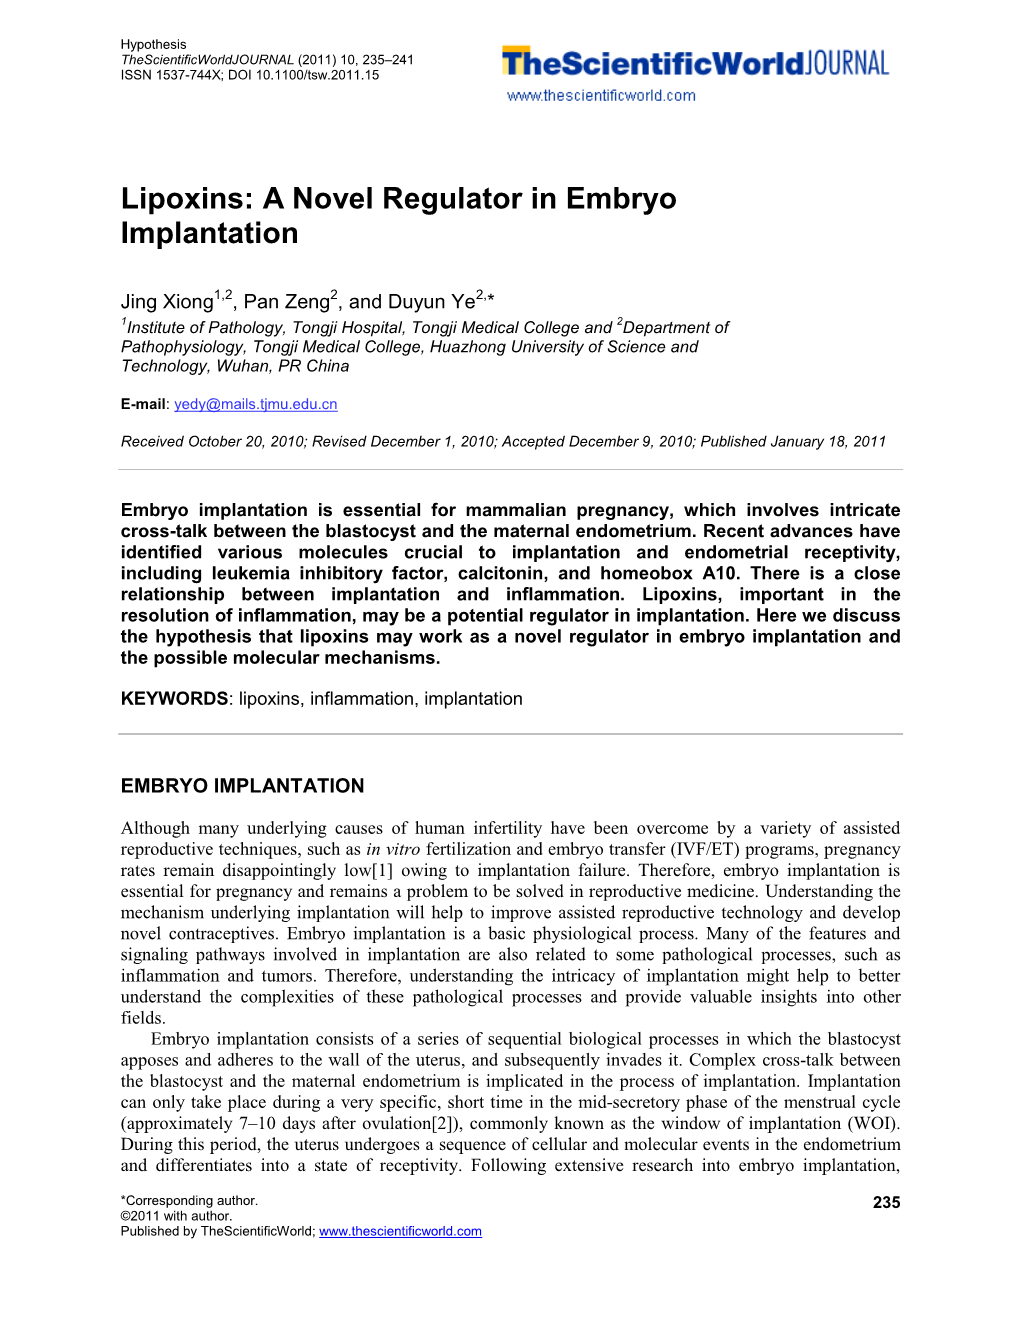 Lipoxins: a Novel Regulator in Embryo Implantation